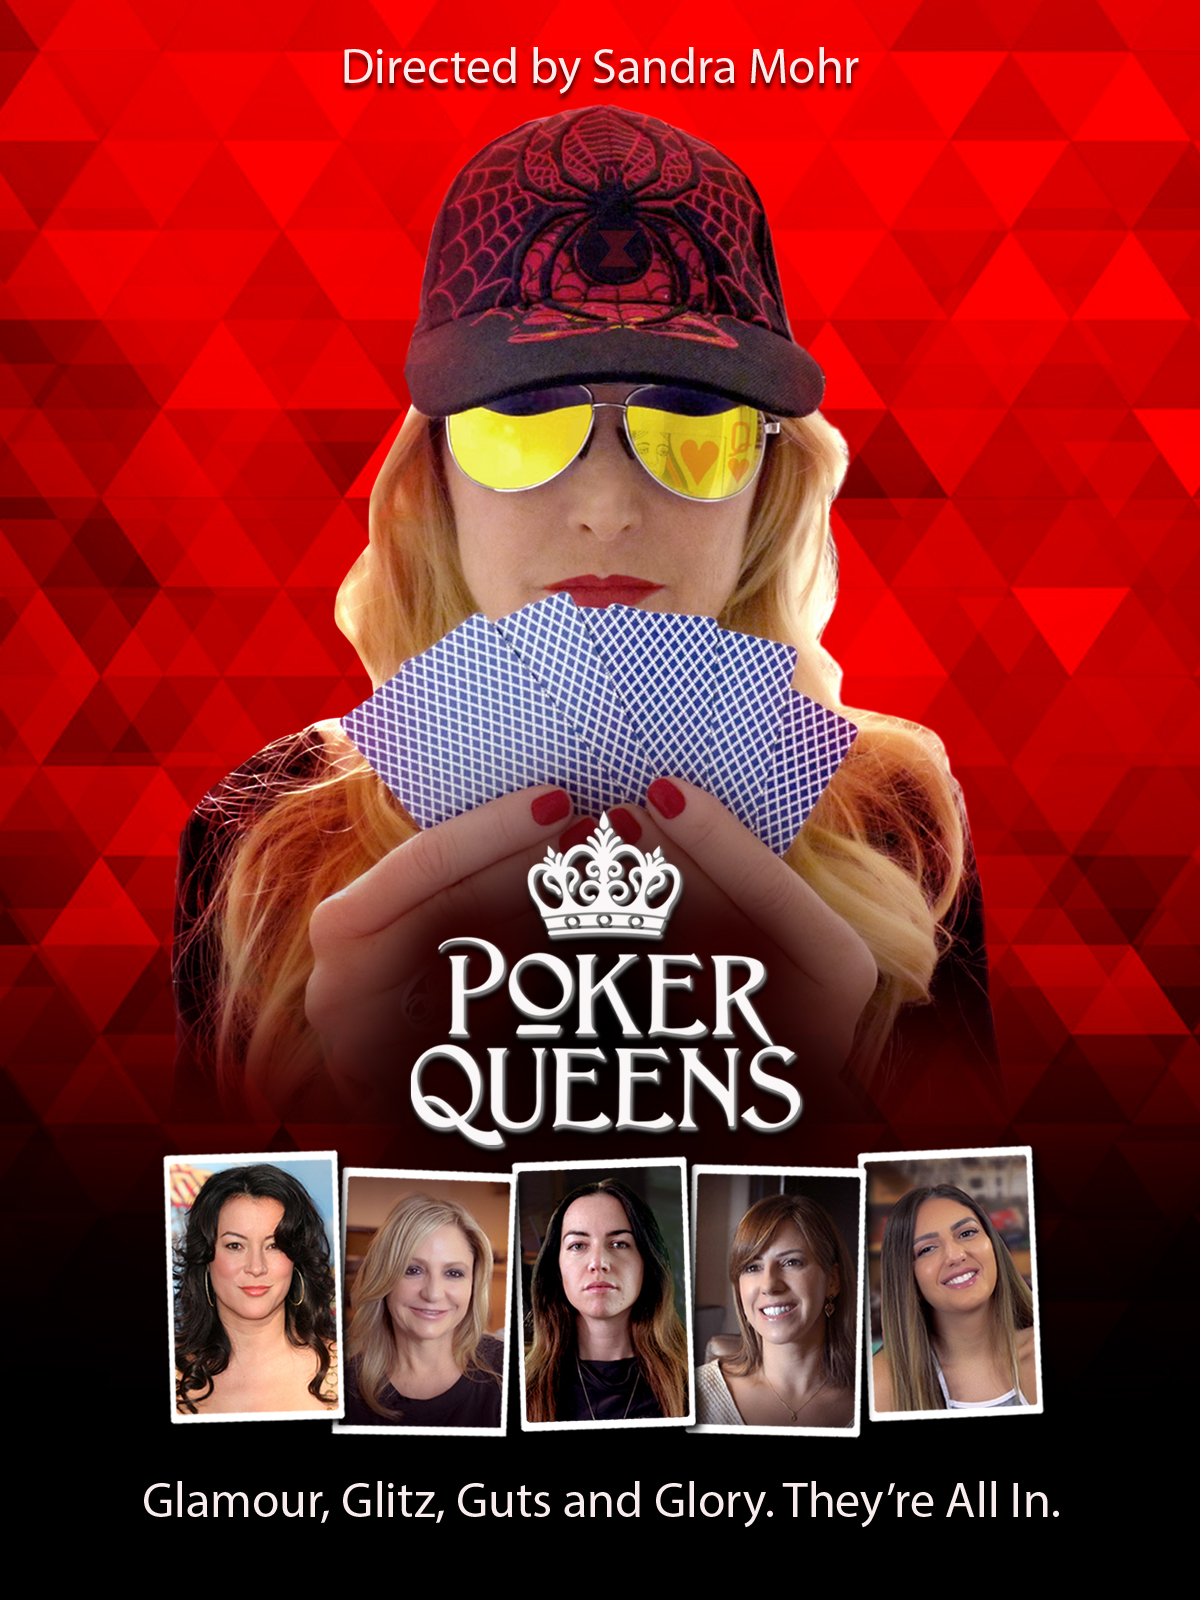 Nonton film Poker Queens layarkaca21 indoxx1 ganool online streaming terbaru